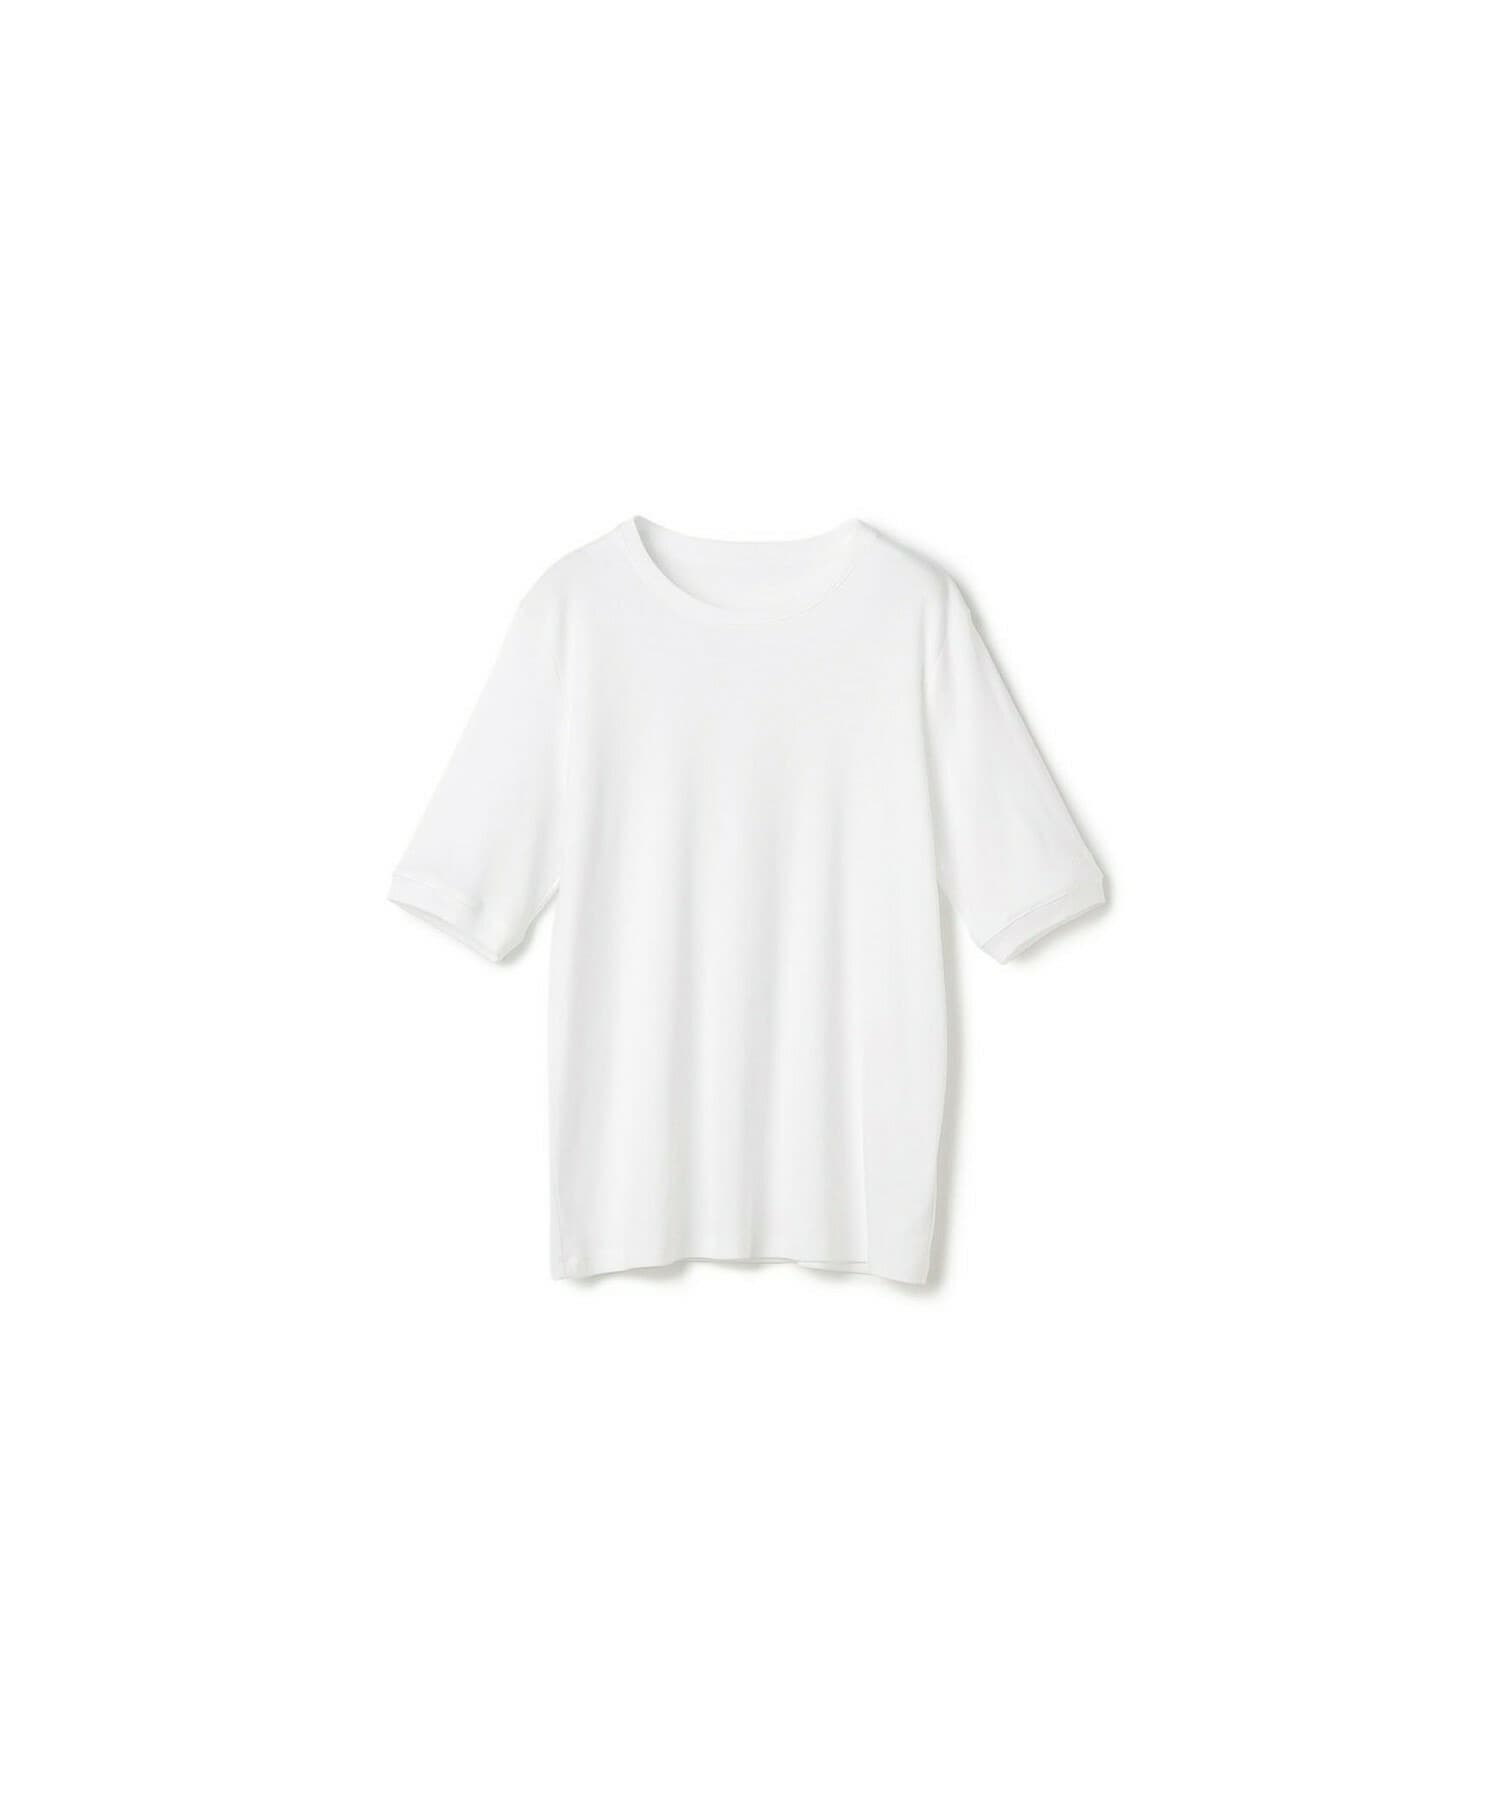 【yoshie inaba】コットンジャージ半袖Tシャツ 詳細画像 ホワイト 1